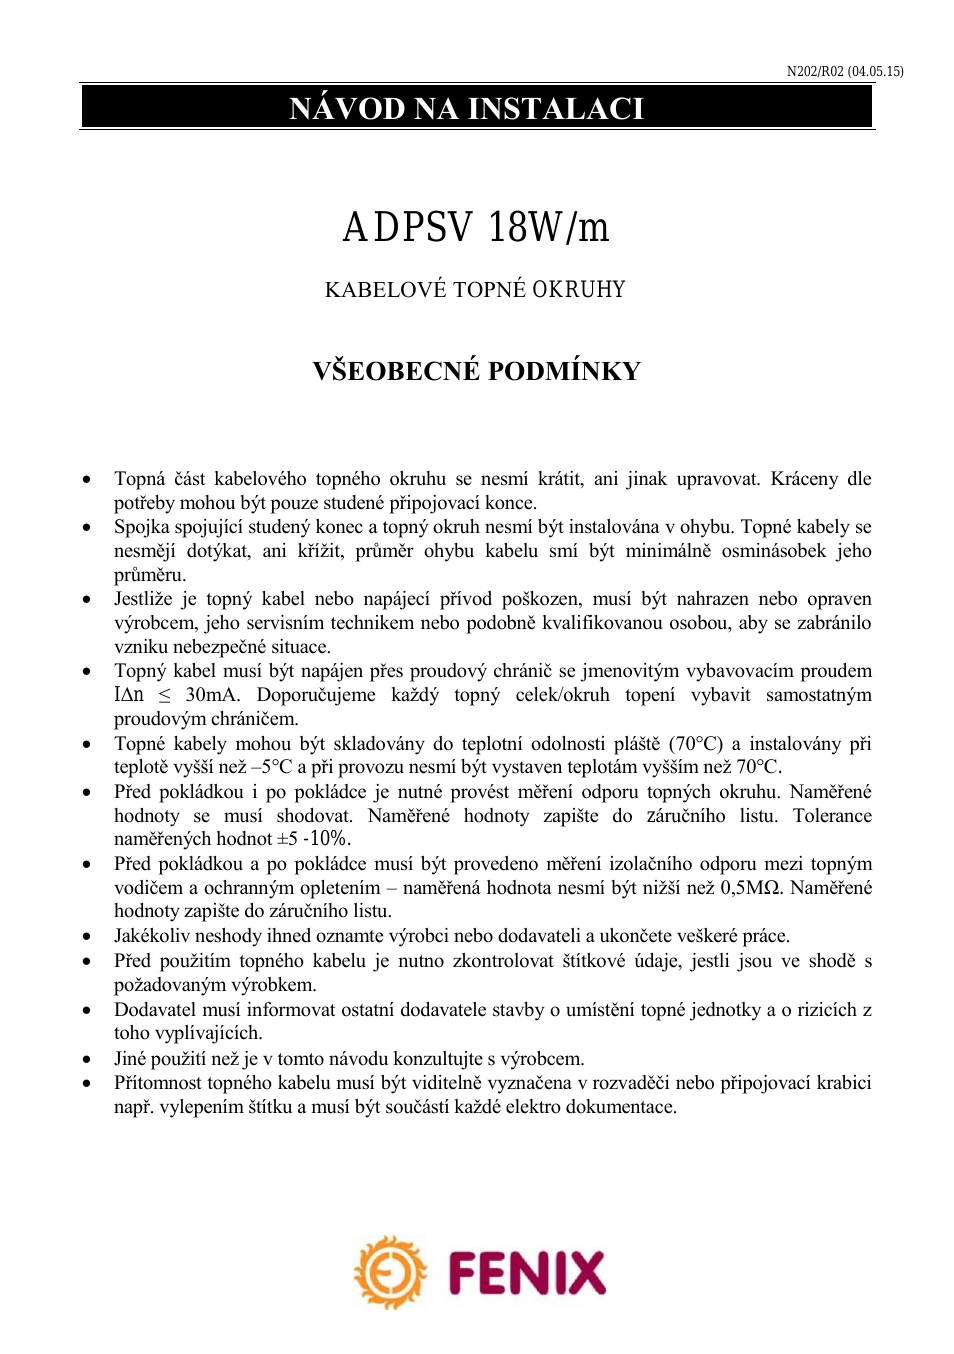 ADPSV 18